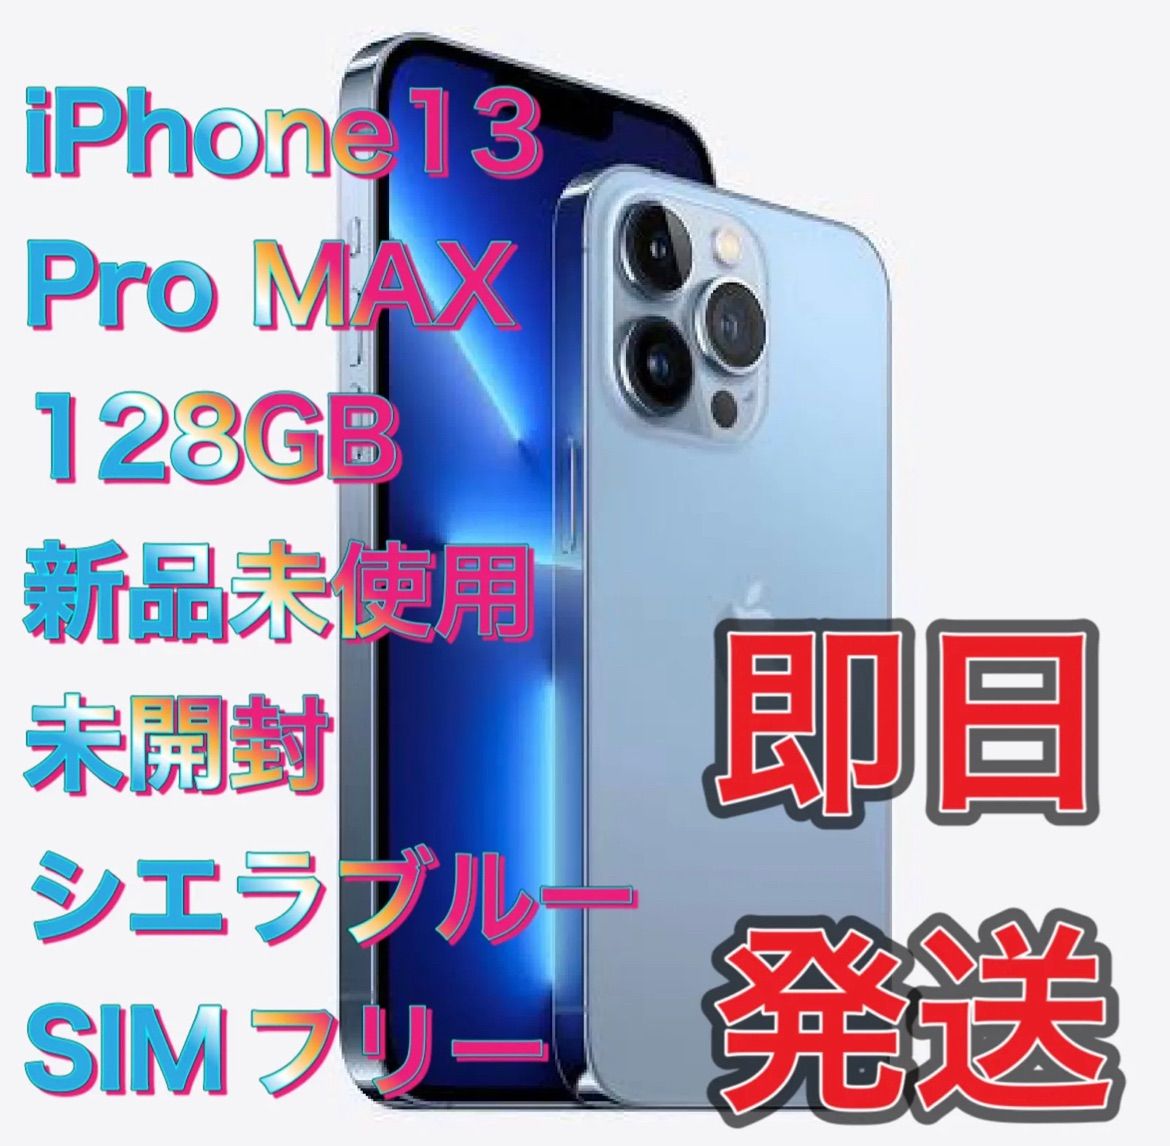 iPhone 13Pro MAX 128GB SIMフリー - STショップ - メルカリ